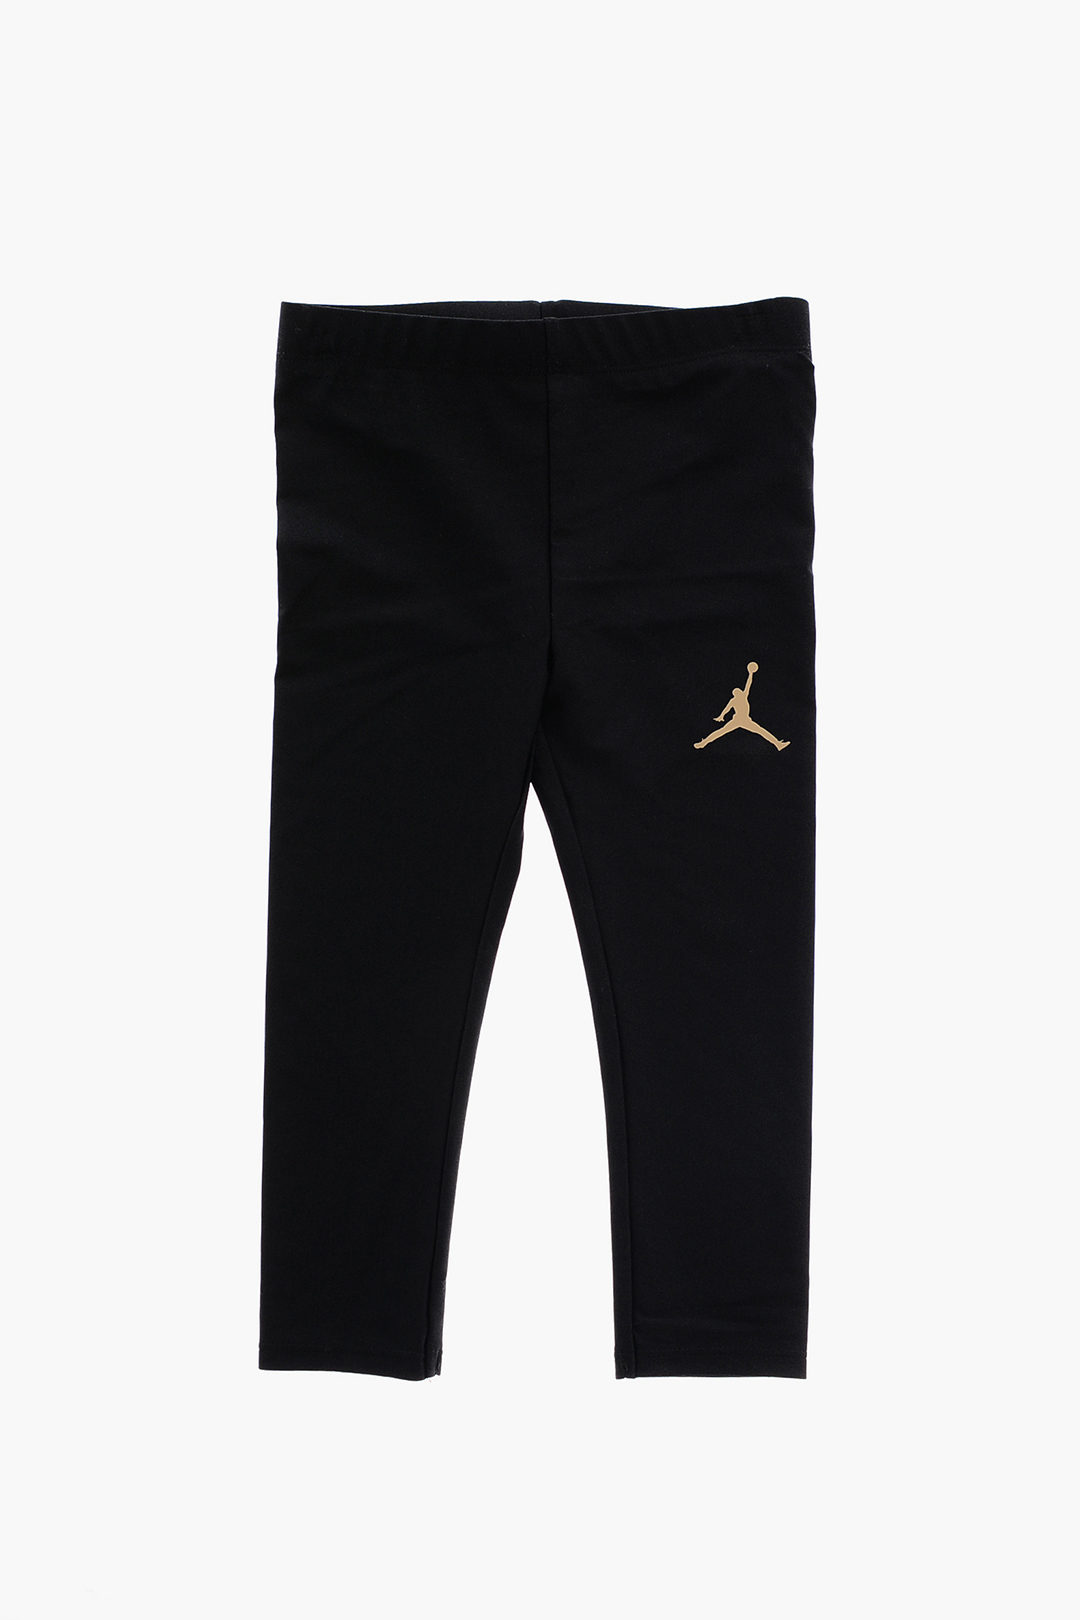 Nike Air Jordans Black leggings Yeezus is a Gemini Jumper Sunglasses  paparazzi Stock Photo - Alamy